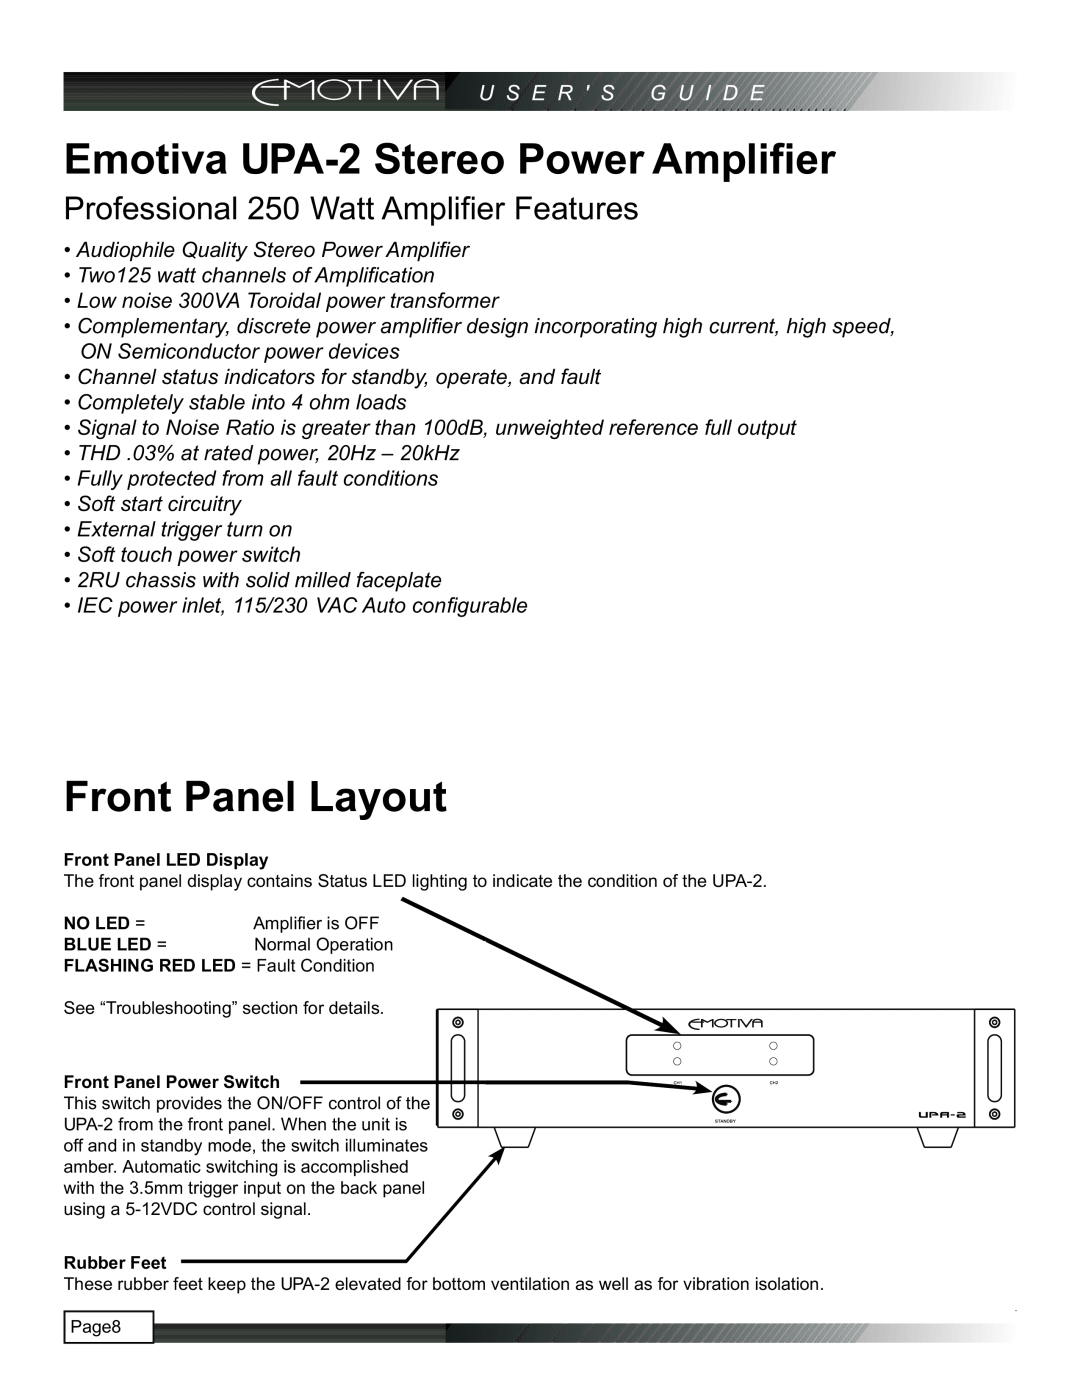 Emotiva manual Emotiva UPA-2Stereo Power Amplifier, Front Panel Layout, Professional 250 Watt Amplifier Features 